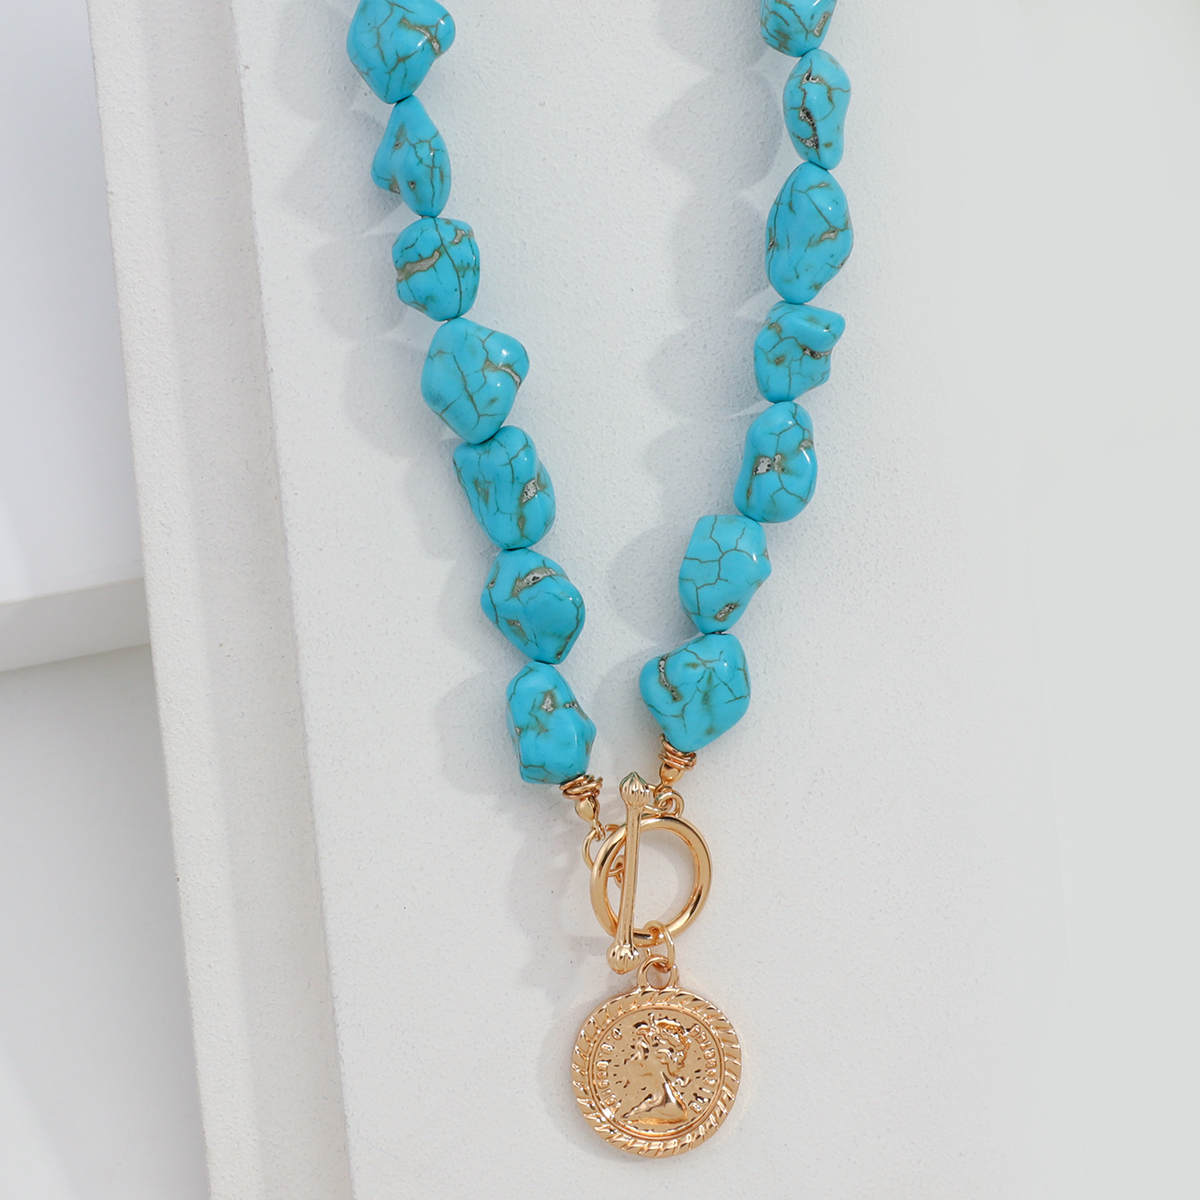 AENSOA Bohemia Blue Stone Beaded Choker Necklaces for Women Ethnic Golden Metal Portrait Coin Pendant Beads Chain Jewlery 2022